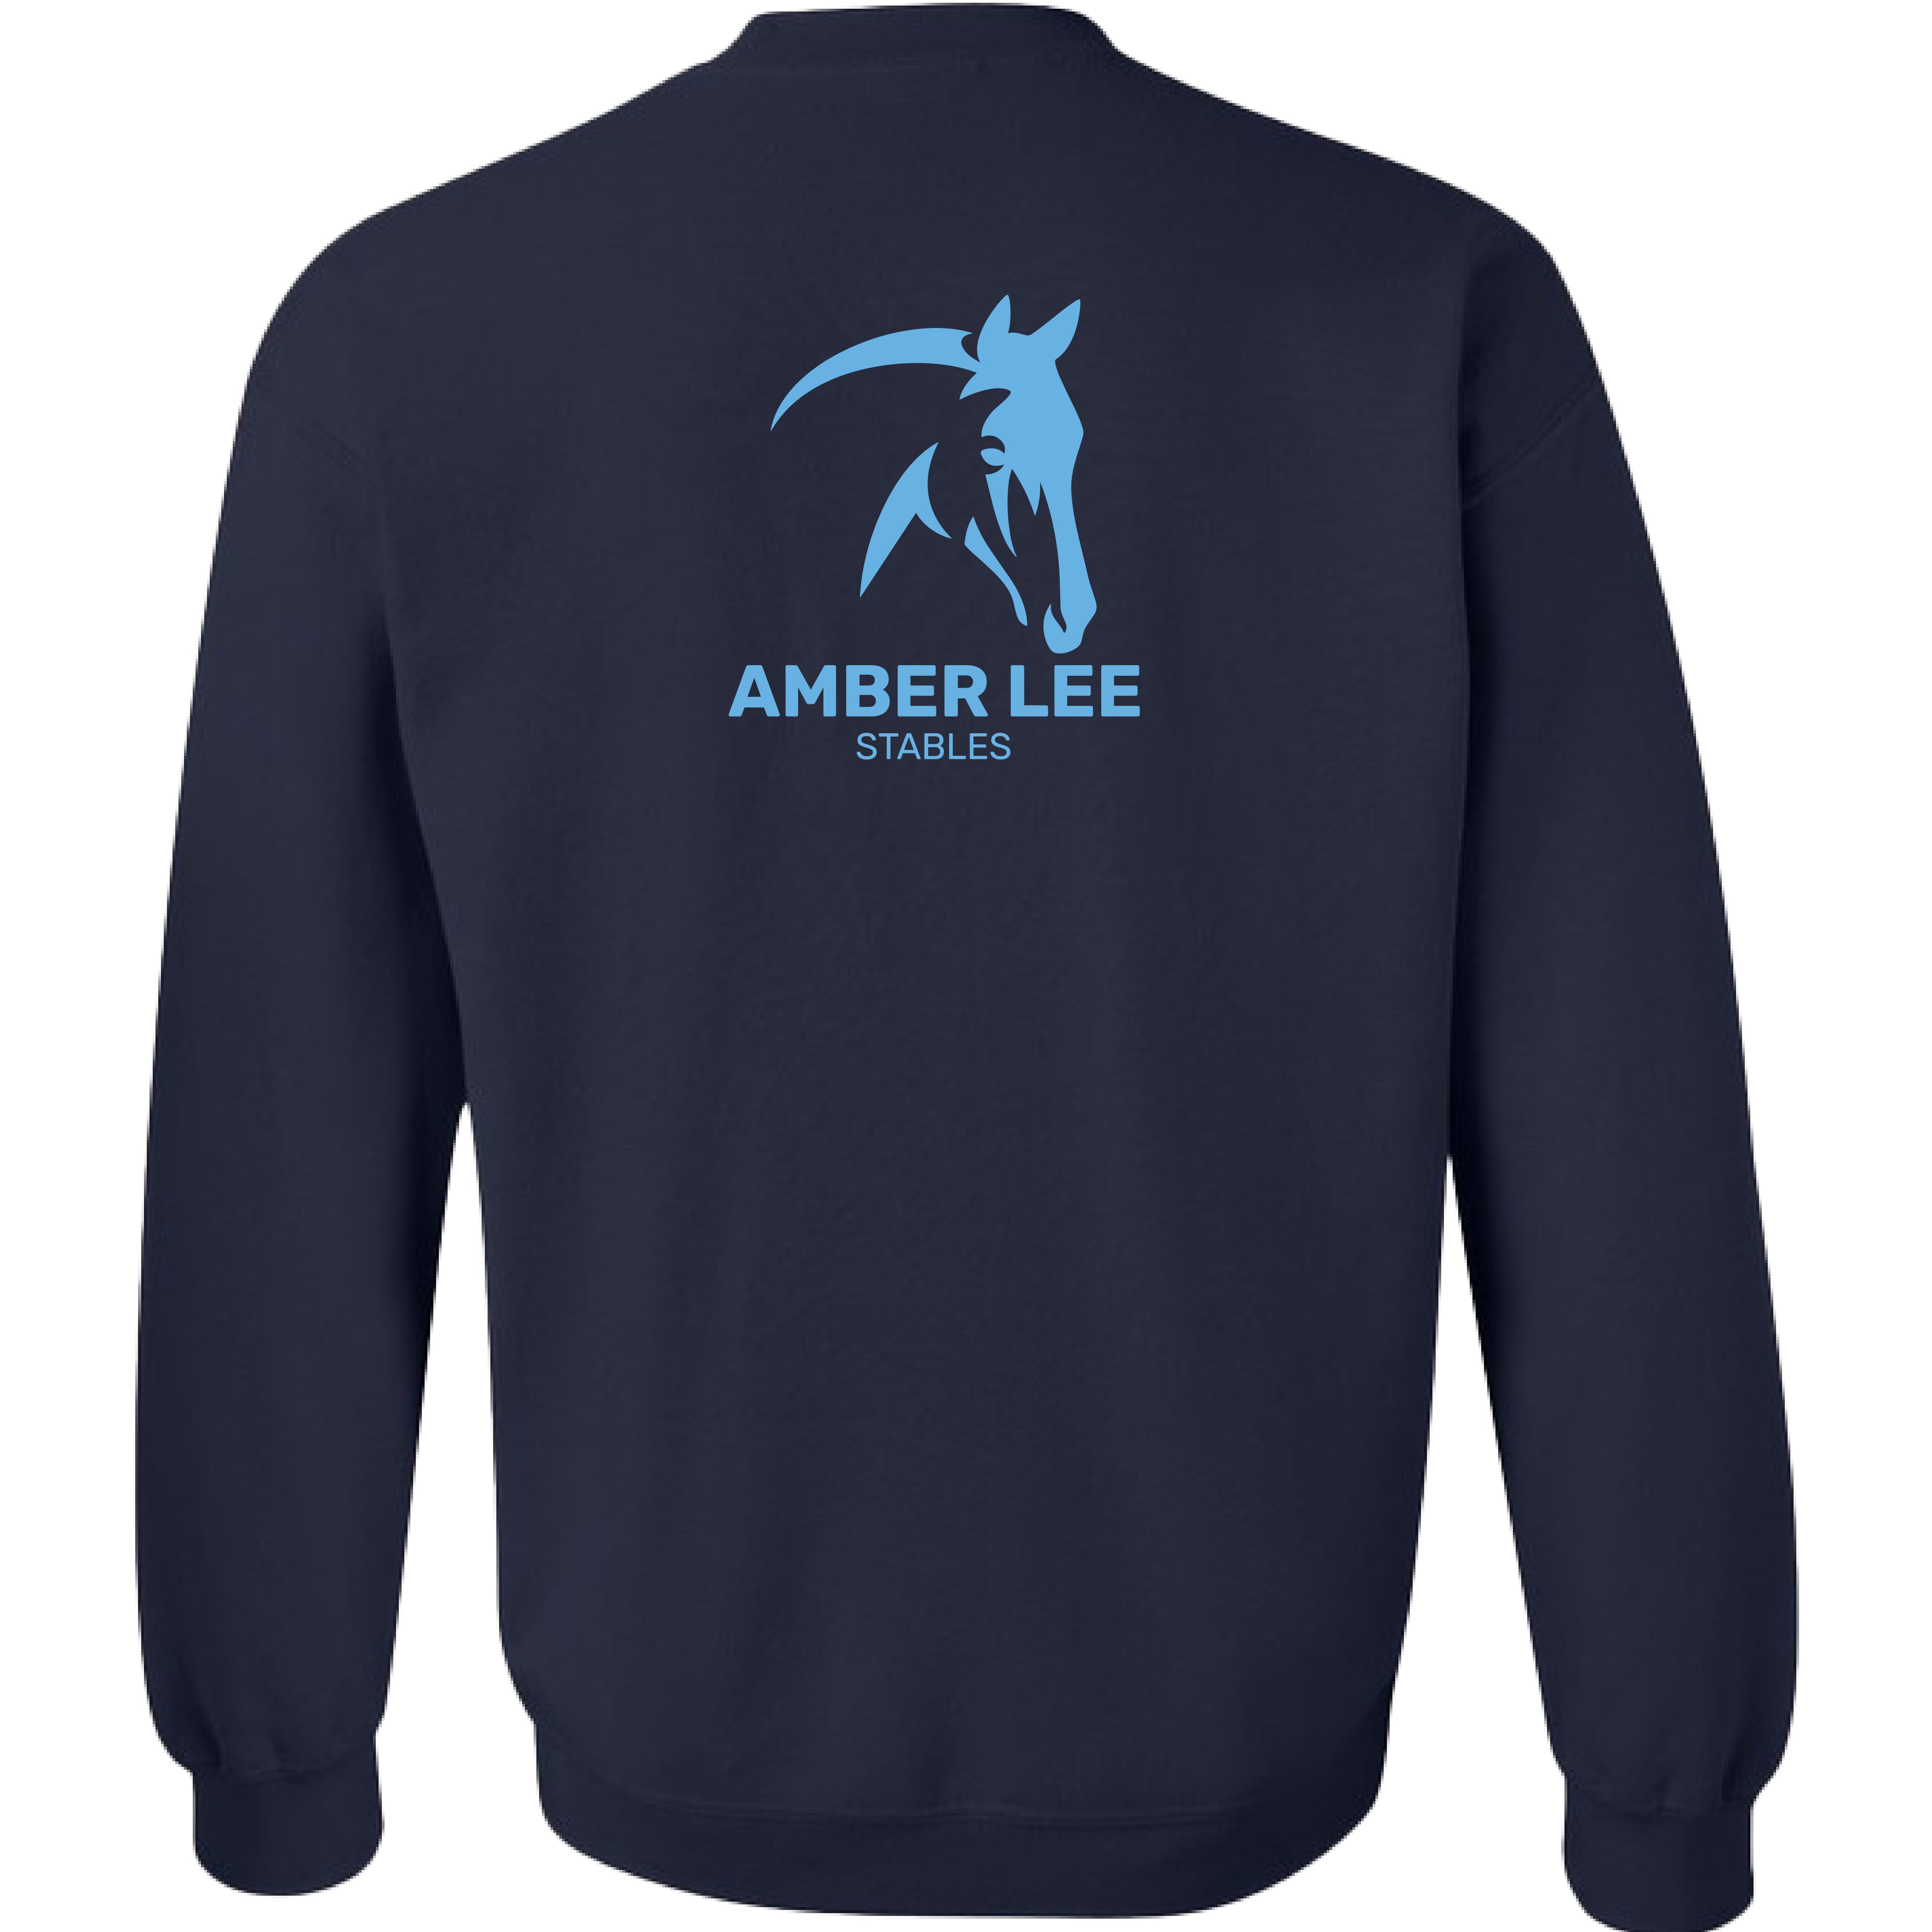 Amber Lee Stables - Unisex Crewneck Sweatshirt